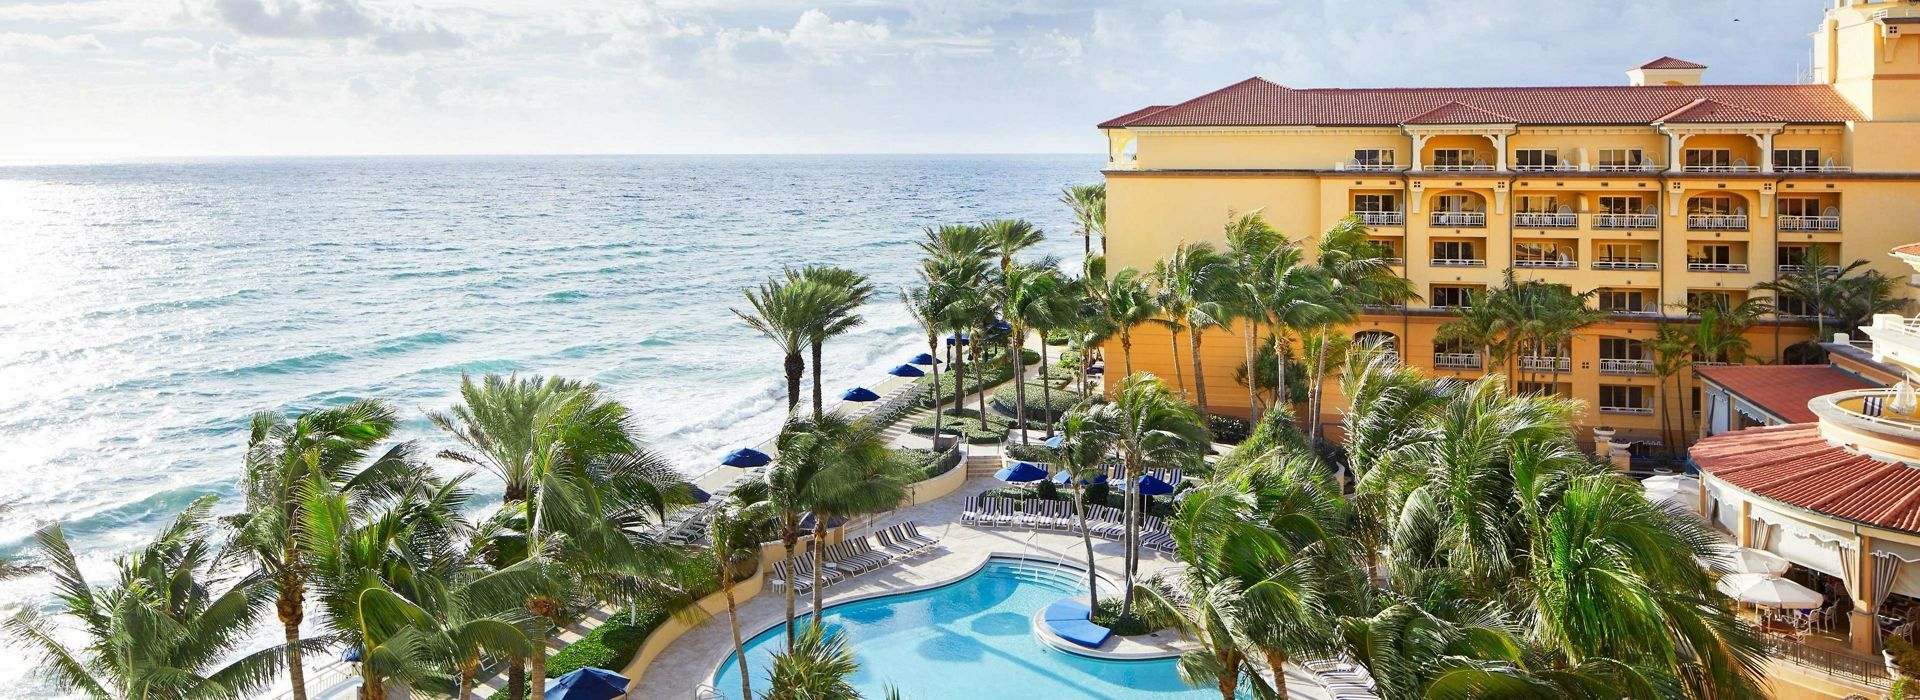 Eau Palm Beach Resort & Spa-Pool.jpg